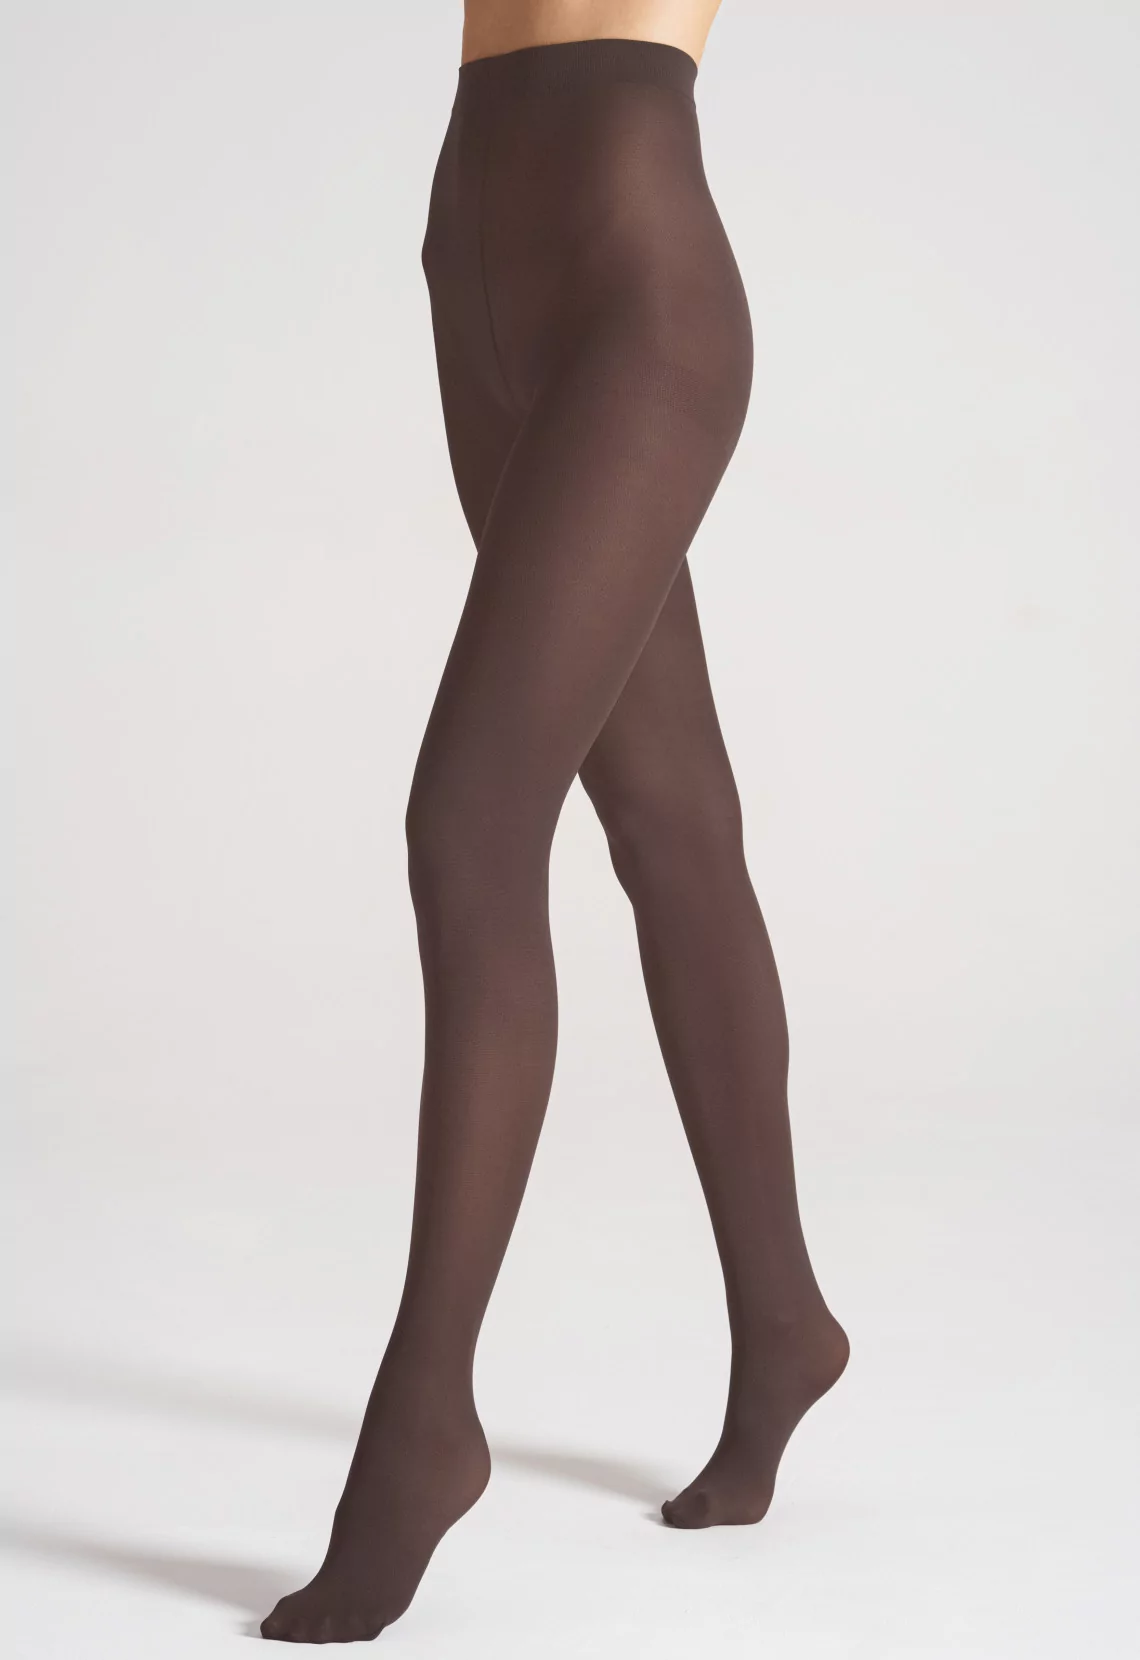 damespanty Satin 40 den - chocolade kleur panty